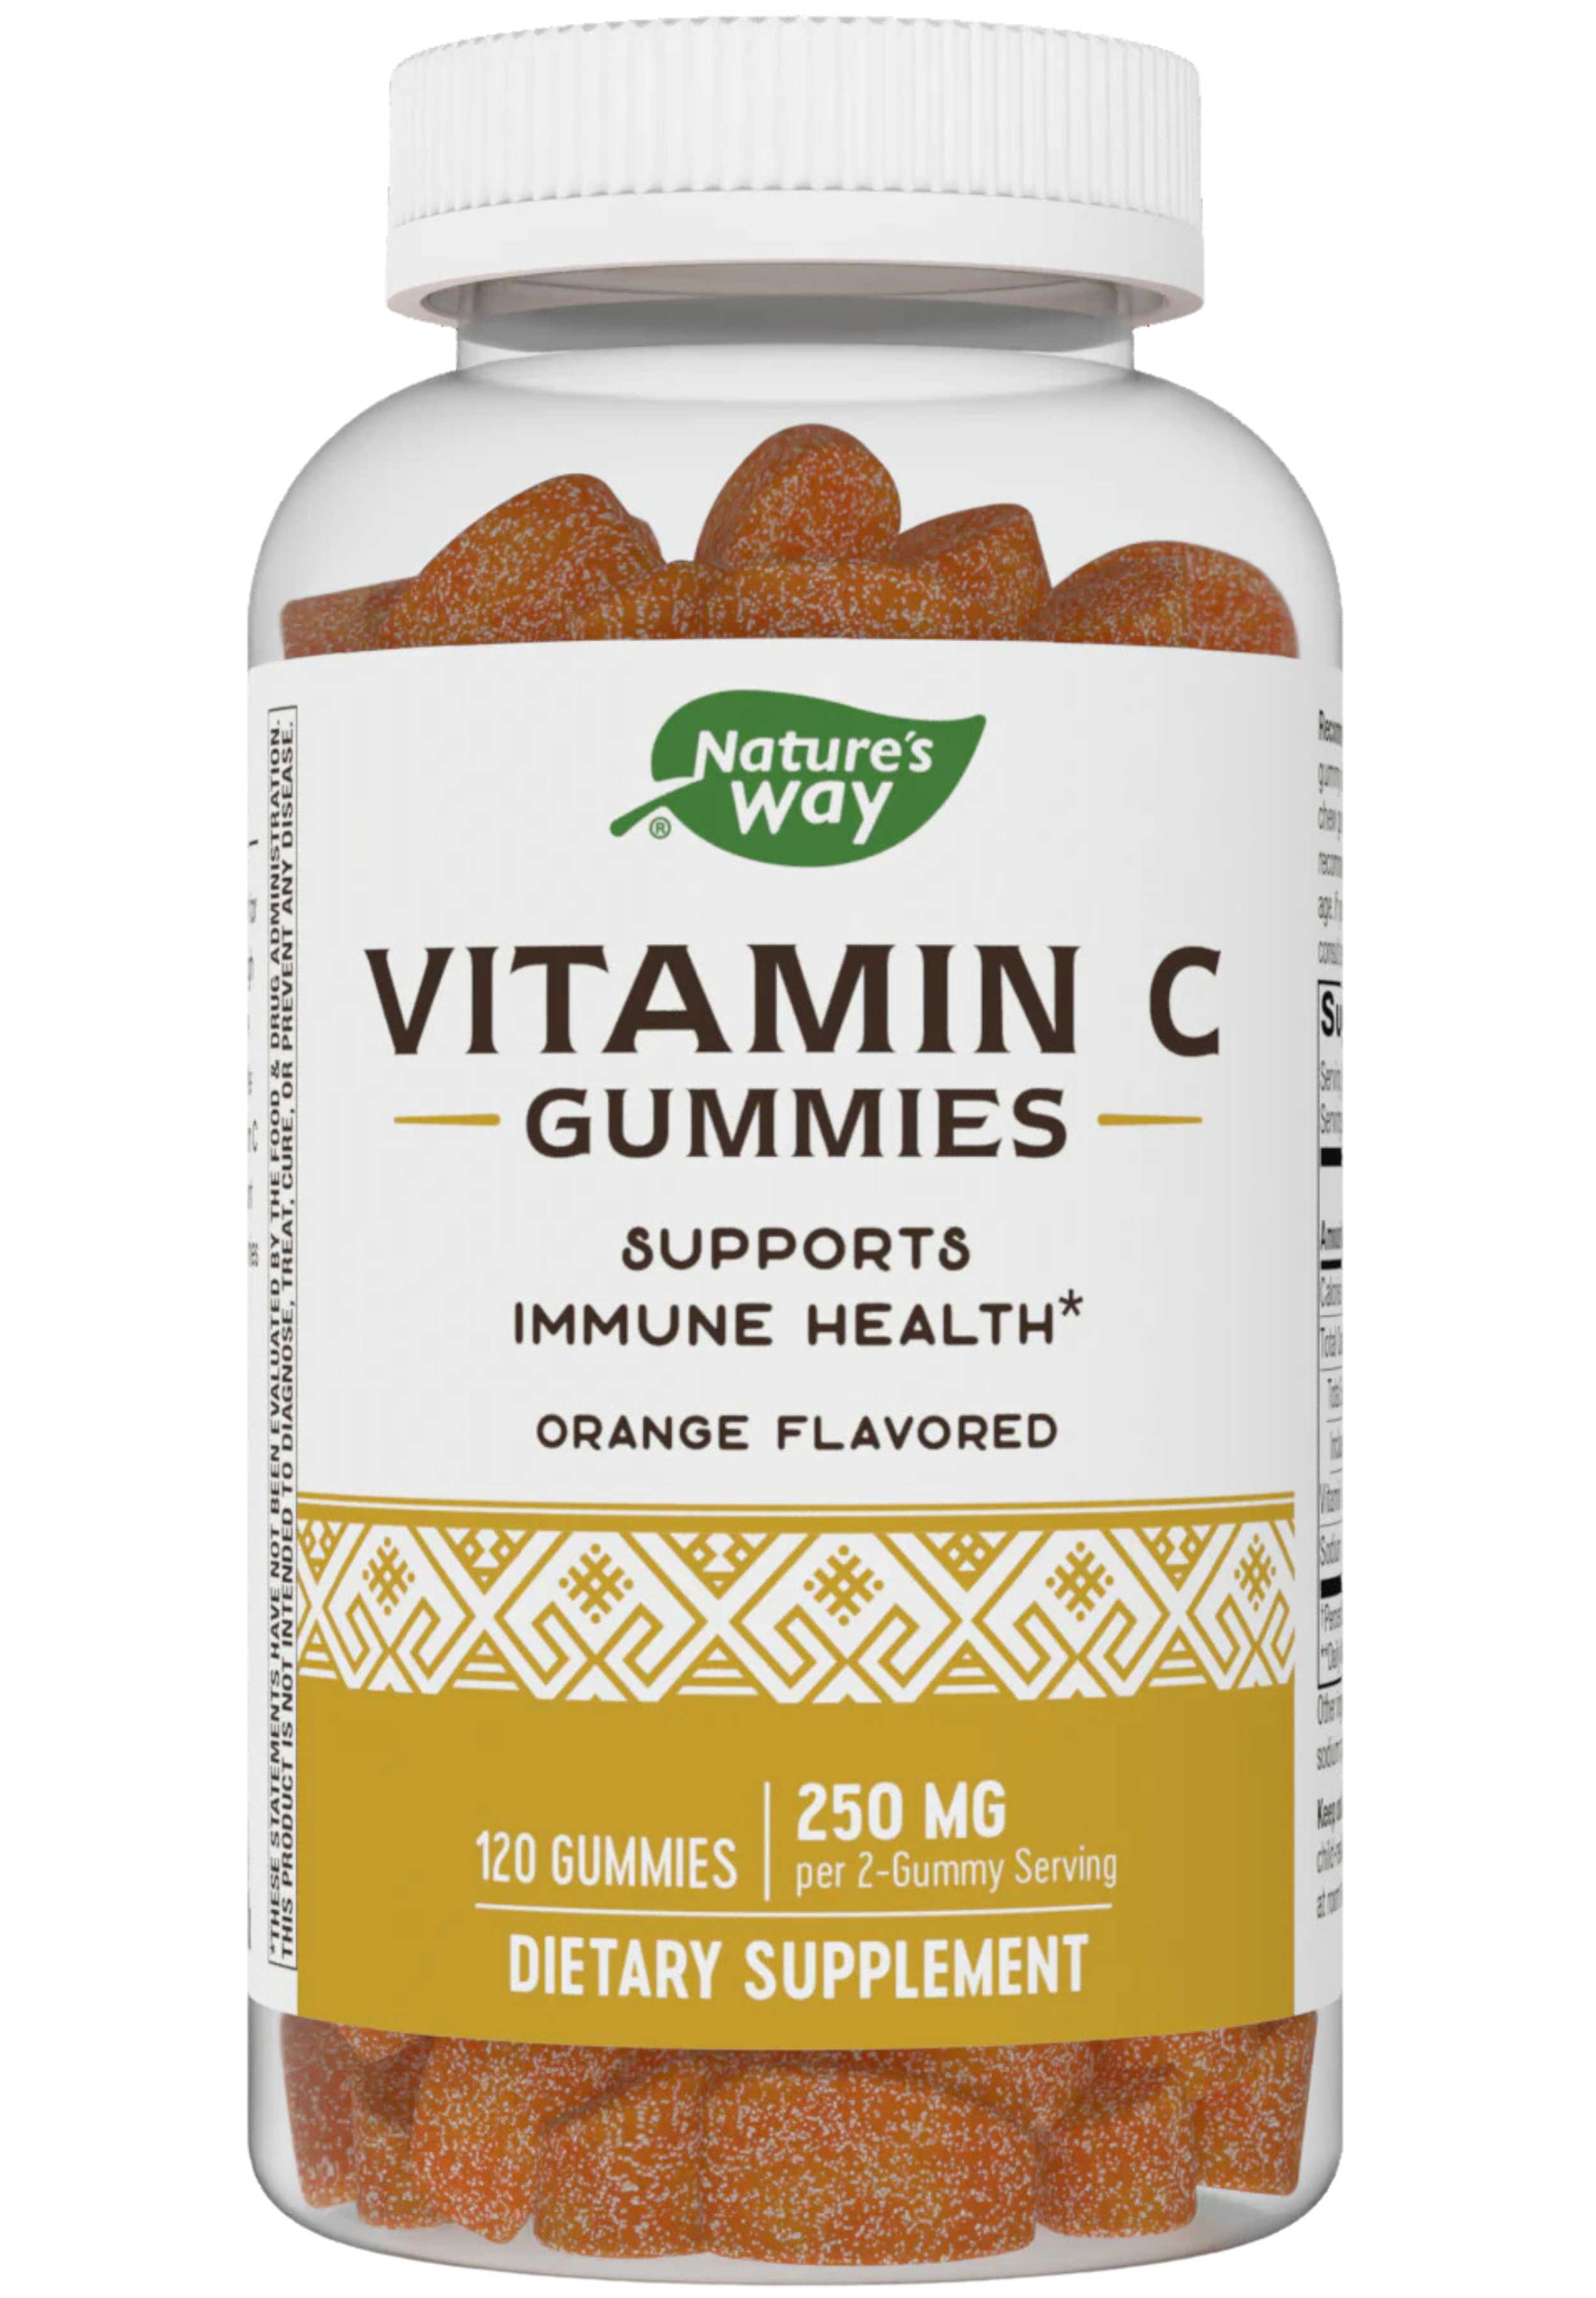 Nature's Way Vitamin C Gummies